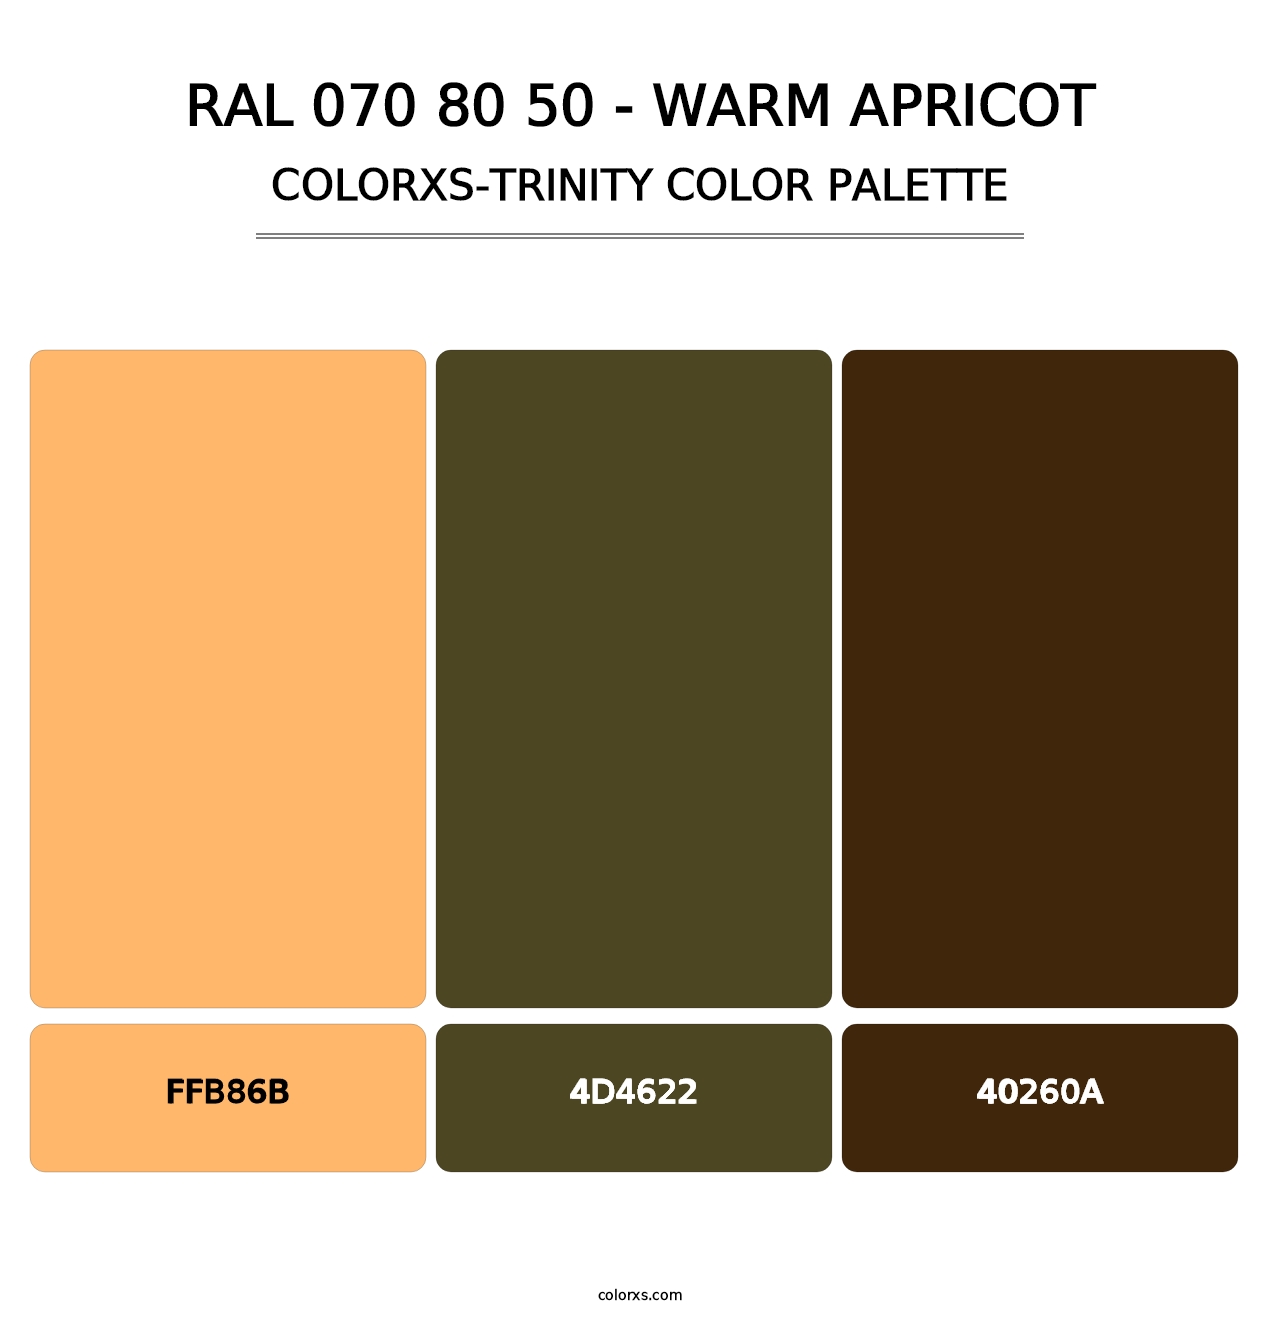 RAL 070 80 50 - Warm Apricot - Colorxs Trinity Palette